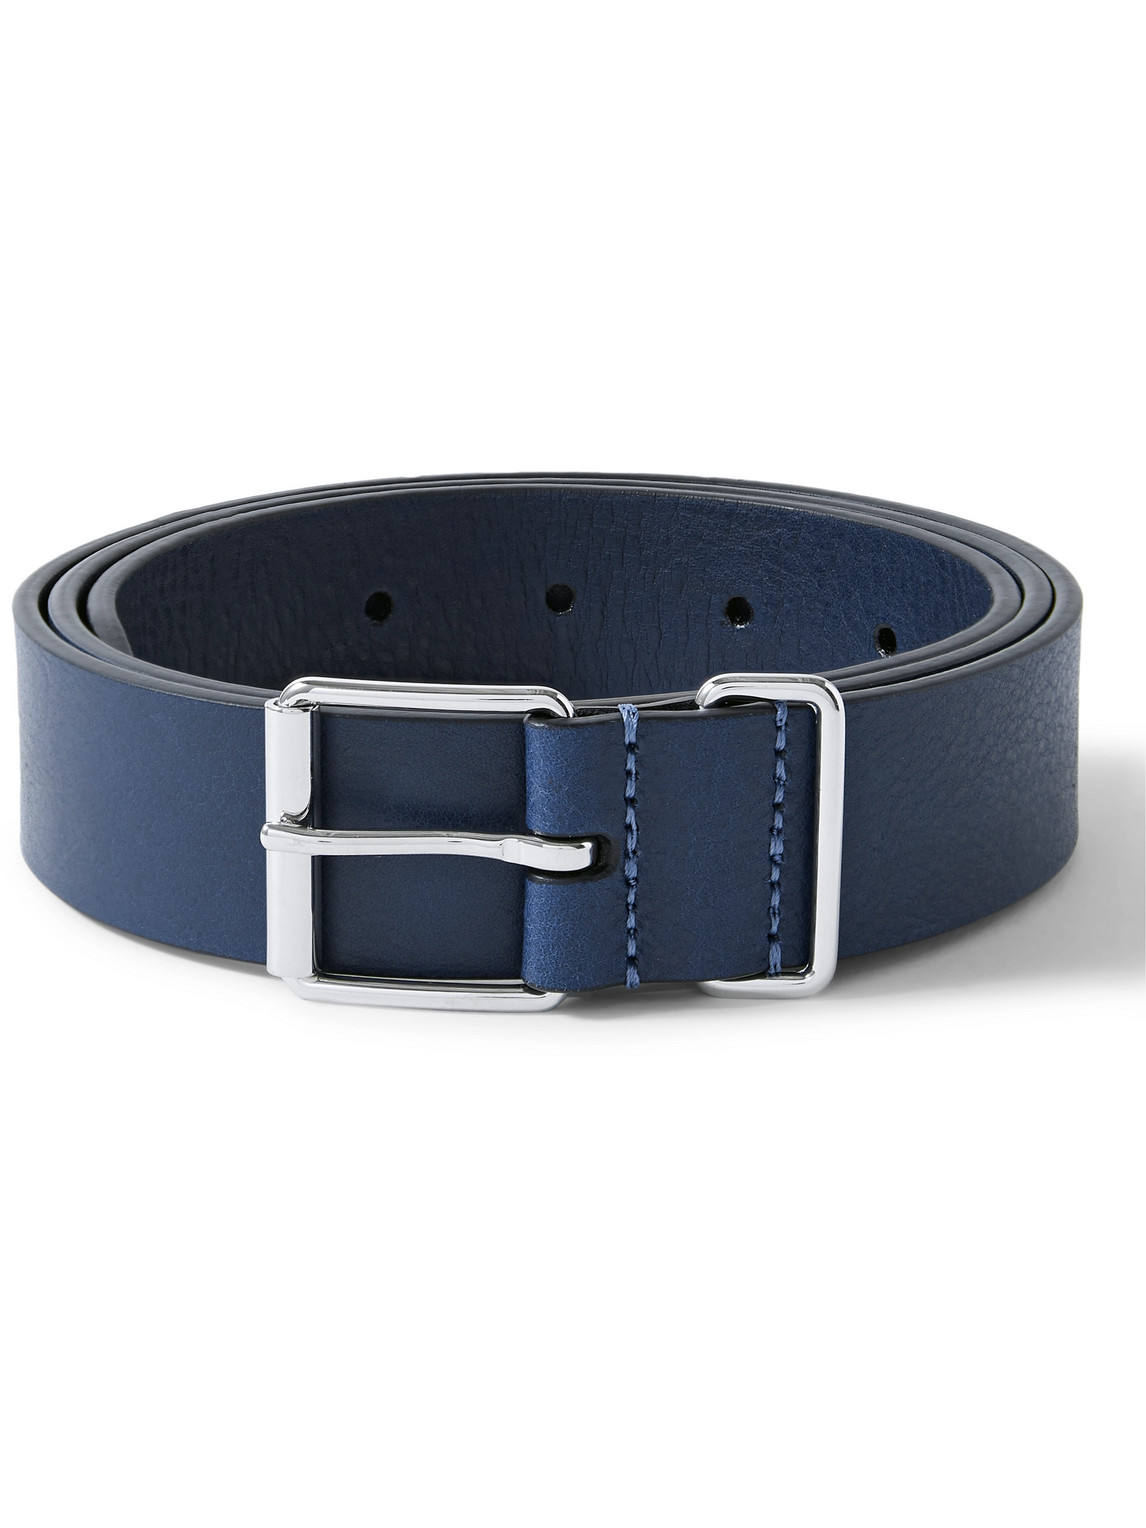 Anderson's 3cm Full-grain Leather Belt In Blue